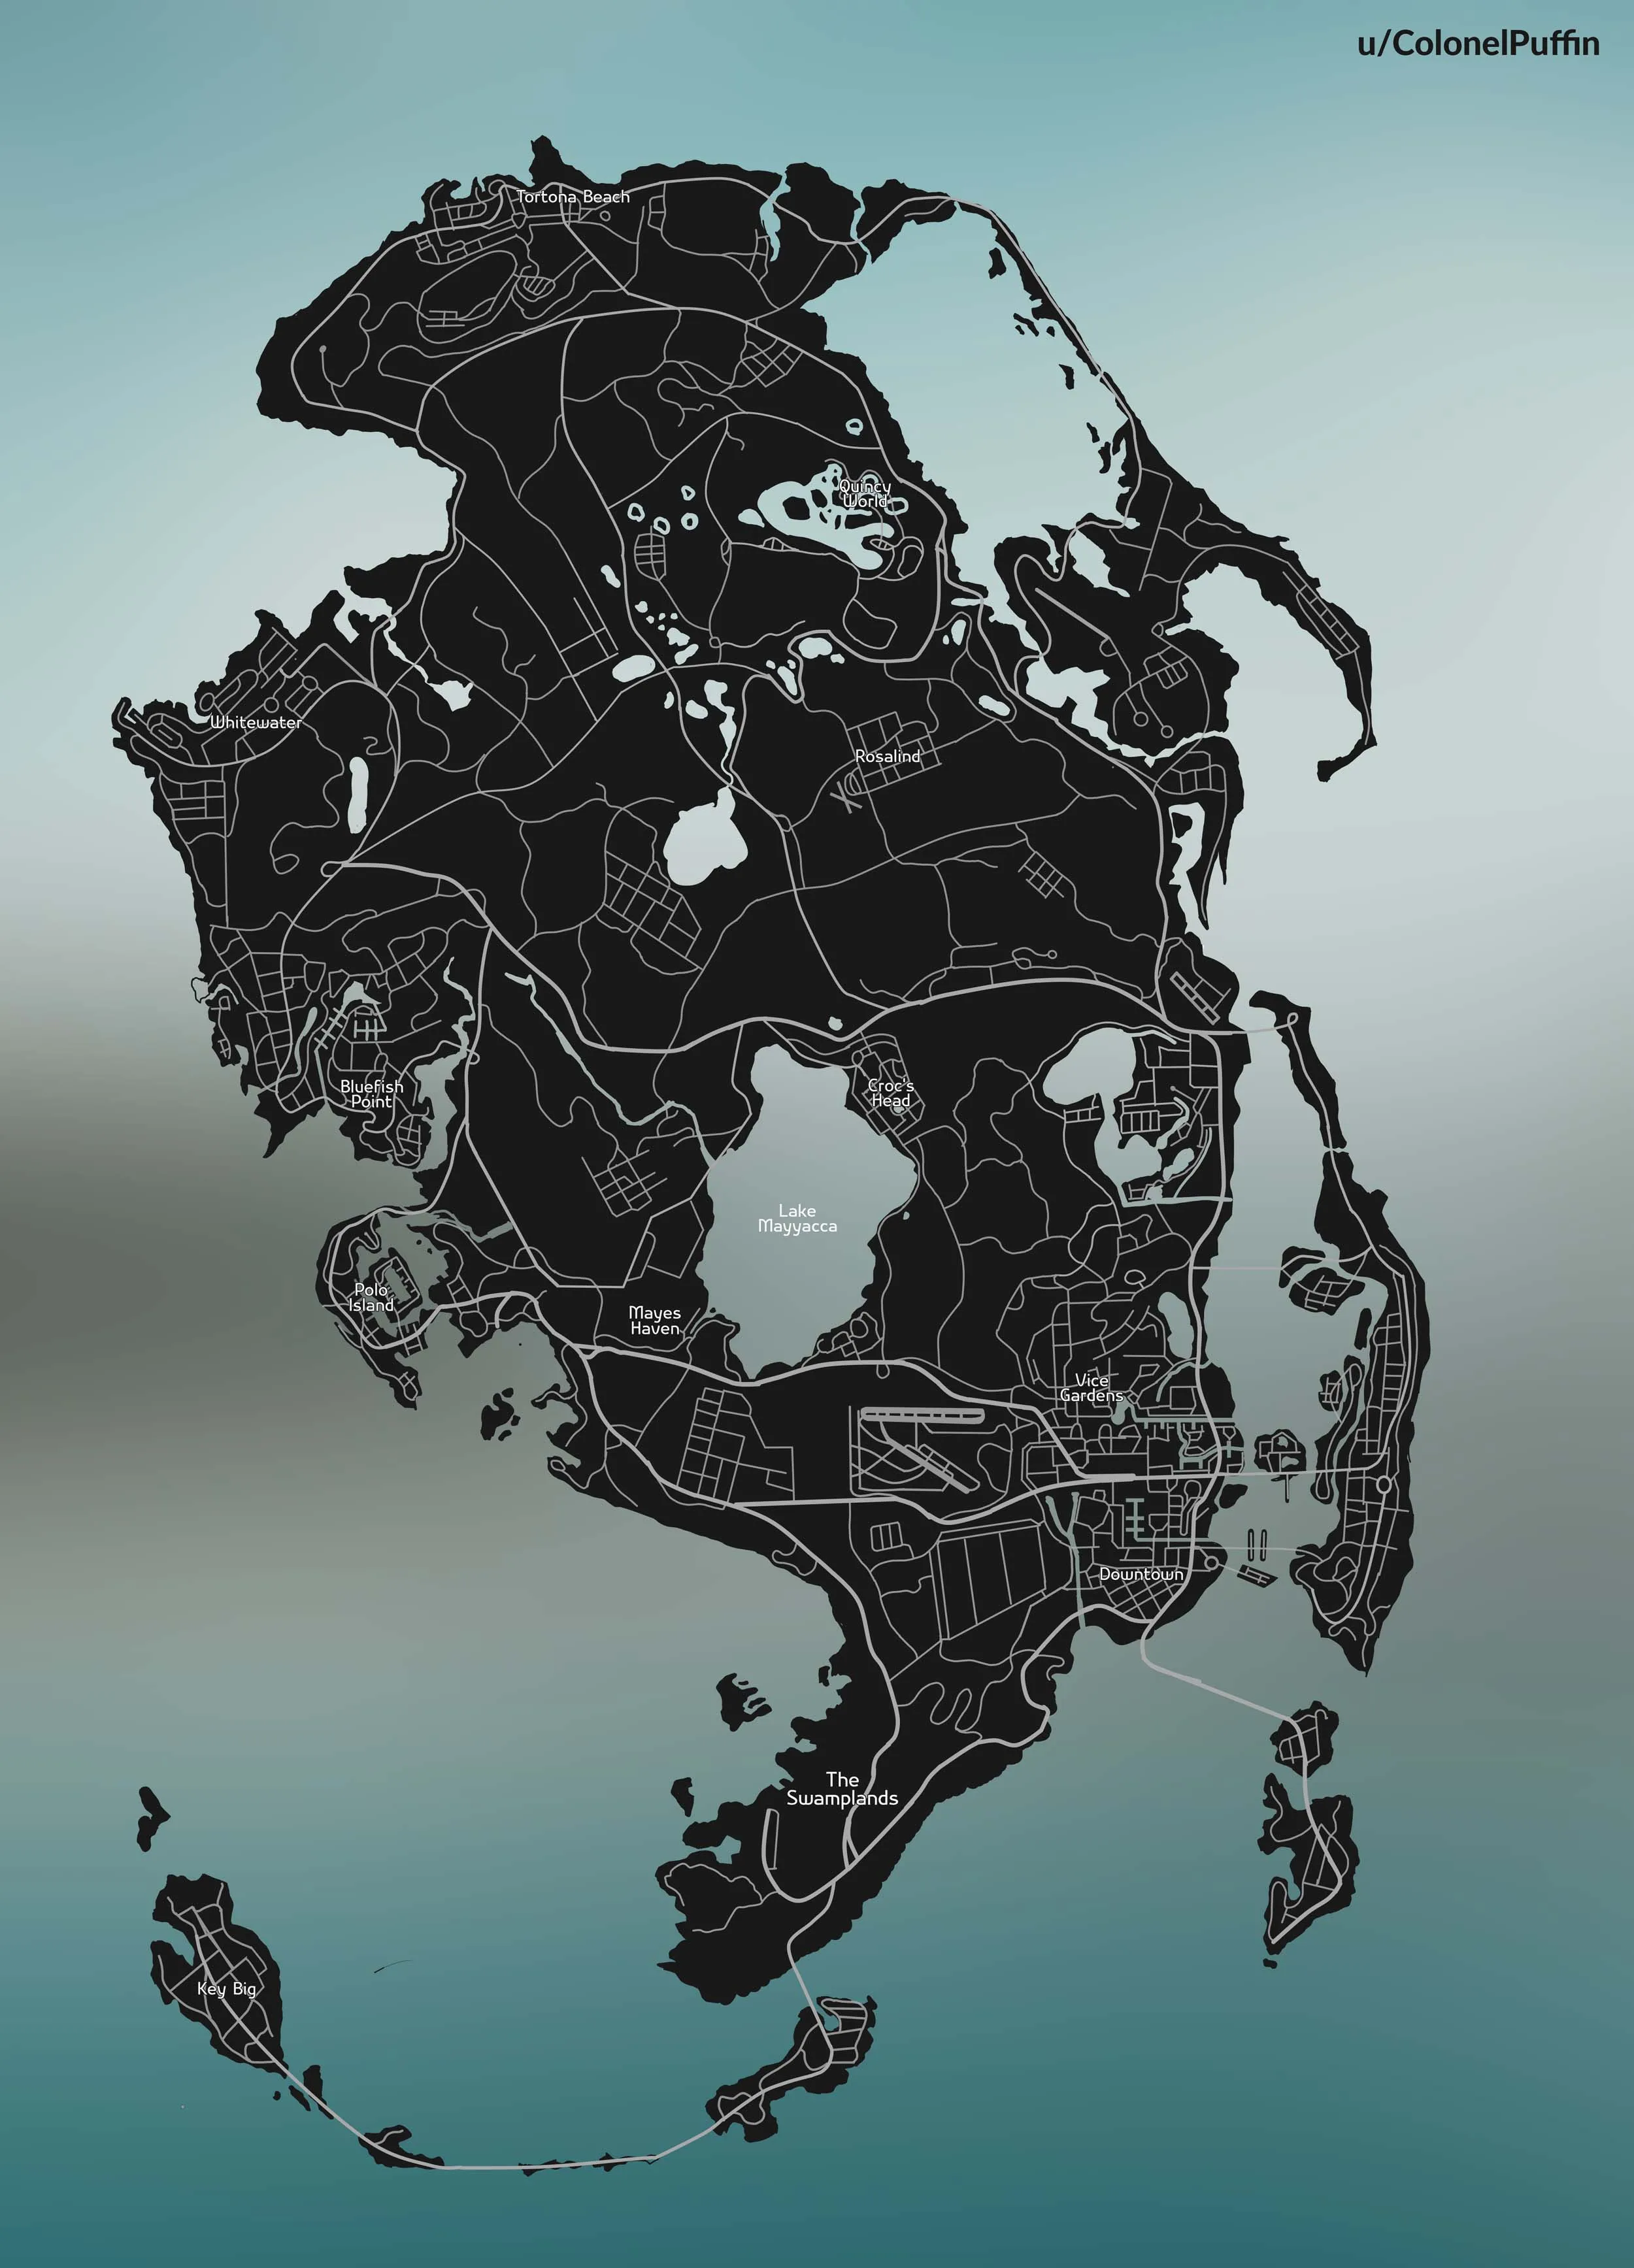 gta 6 map leak - vice city 2021 leaked map hd